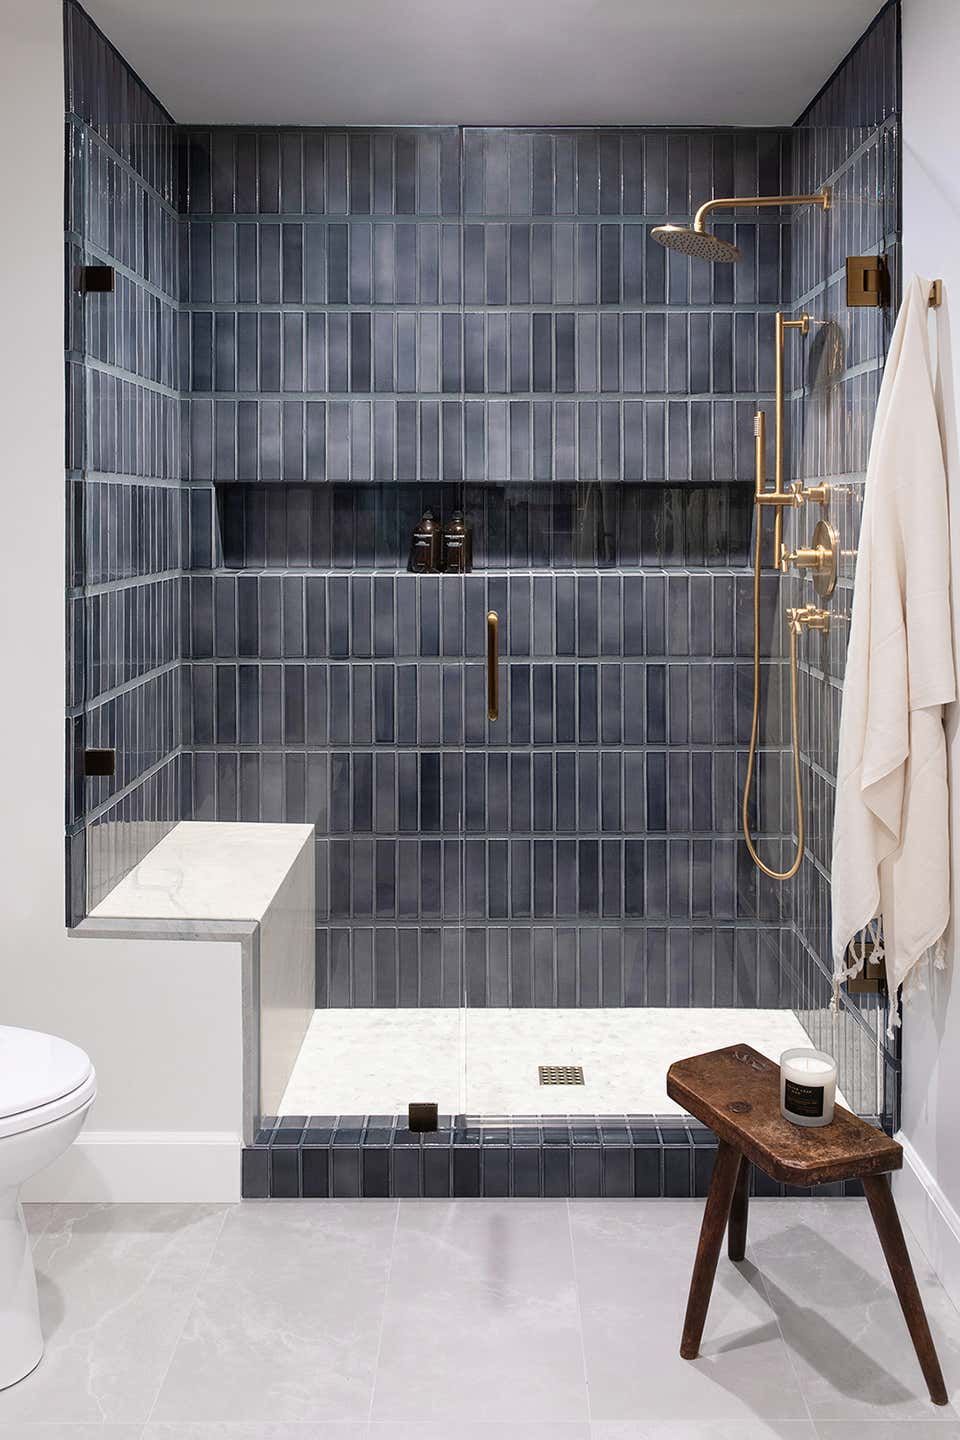 Bathroom Wall Tiles: Enhance the Aesthetics and Functionality of Your Bathroom with Stylish Tiles